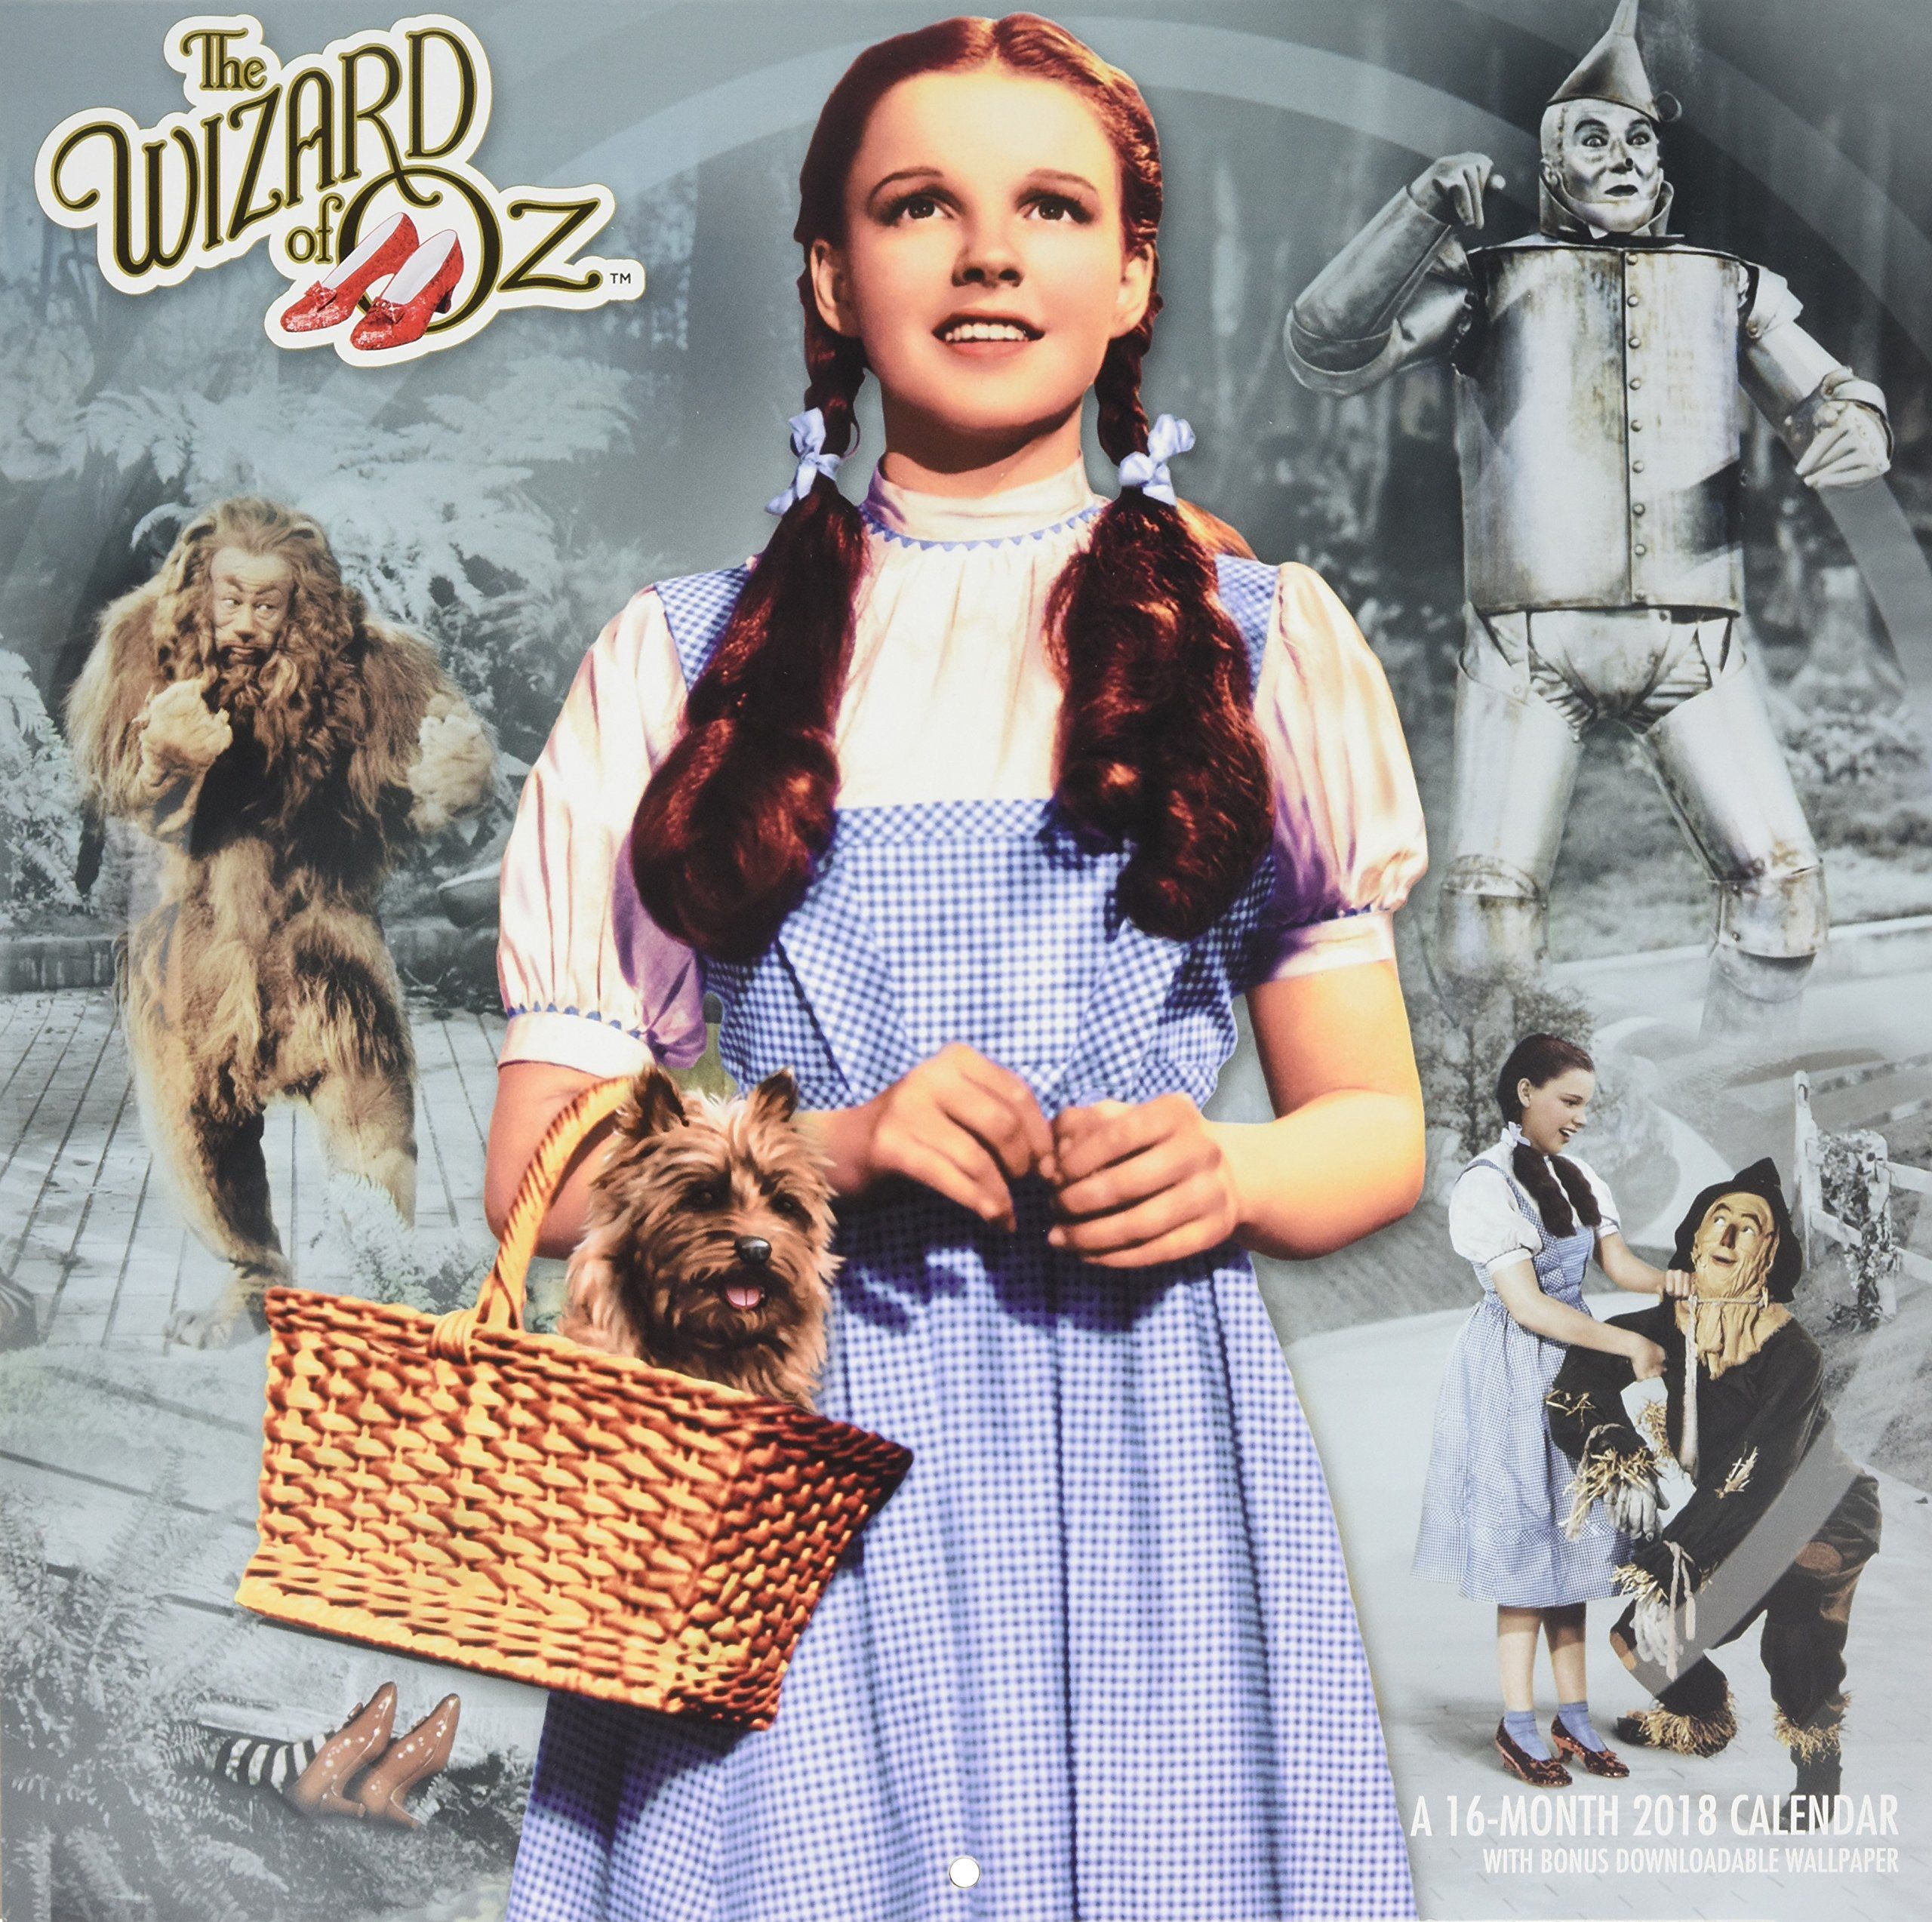 The Wizard of Oz 2018 Calendar: With Bonus Downloadable Wallpaper